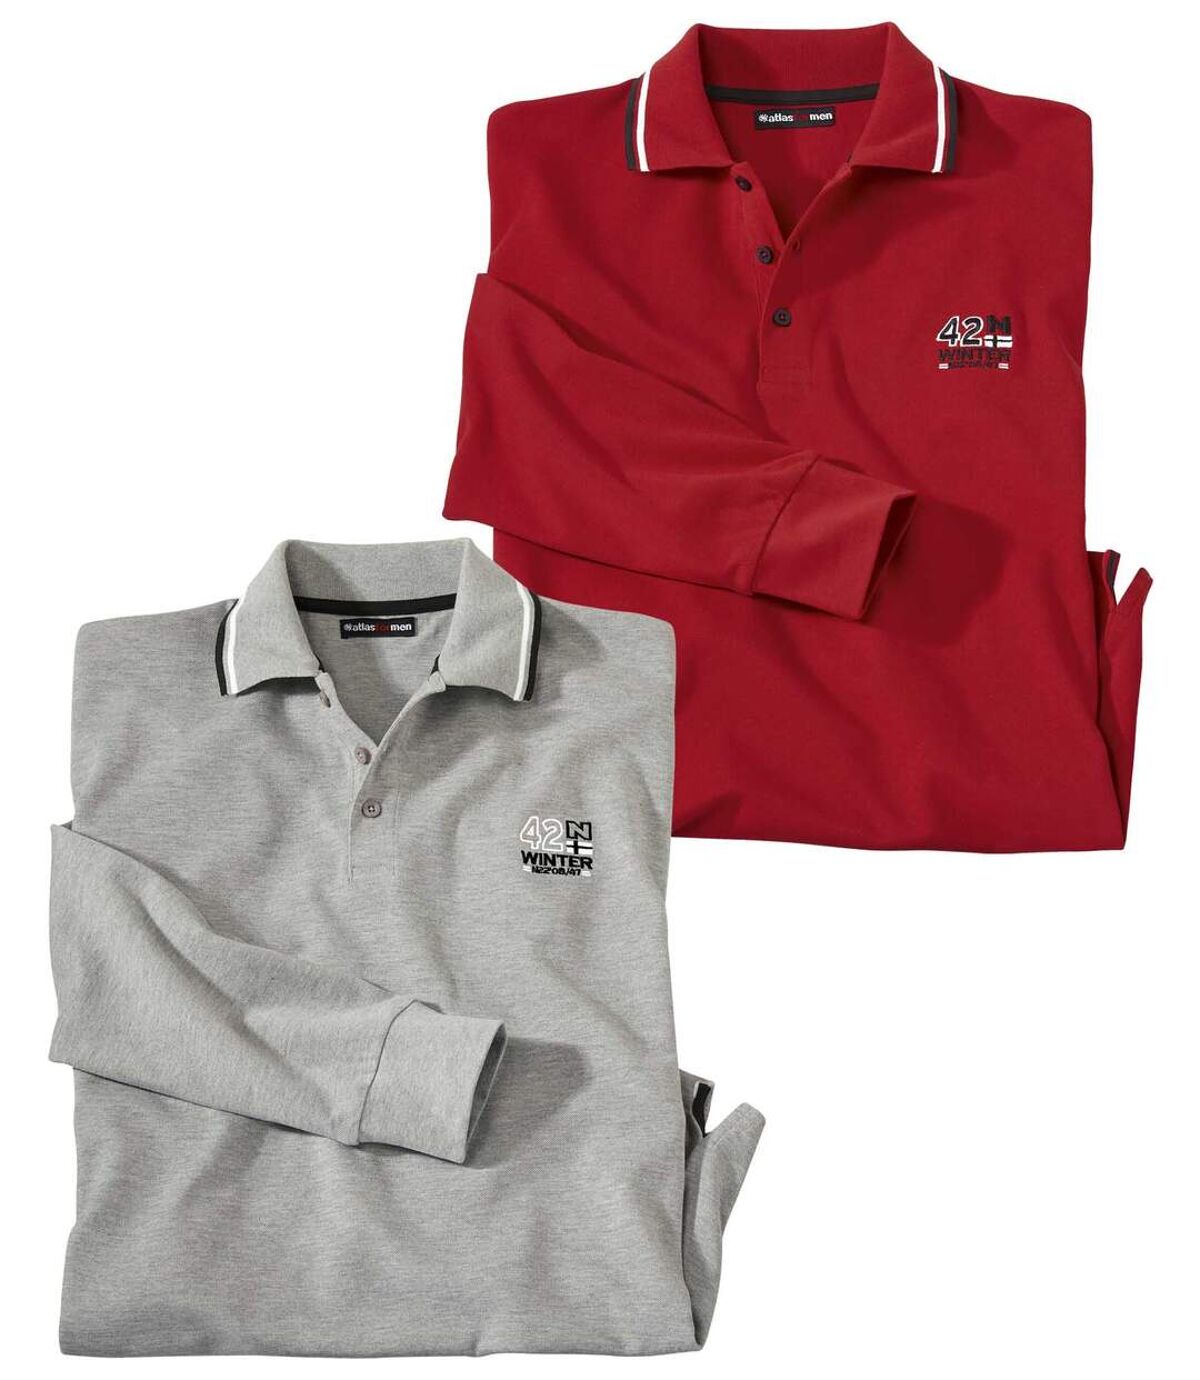 Pack of 2 Men's Gray & Red Polo Shirts - Long-Sleeved Atlas For Men